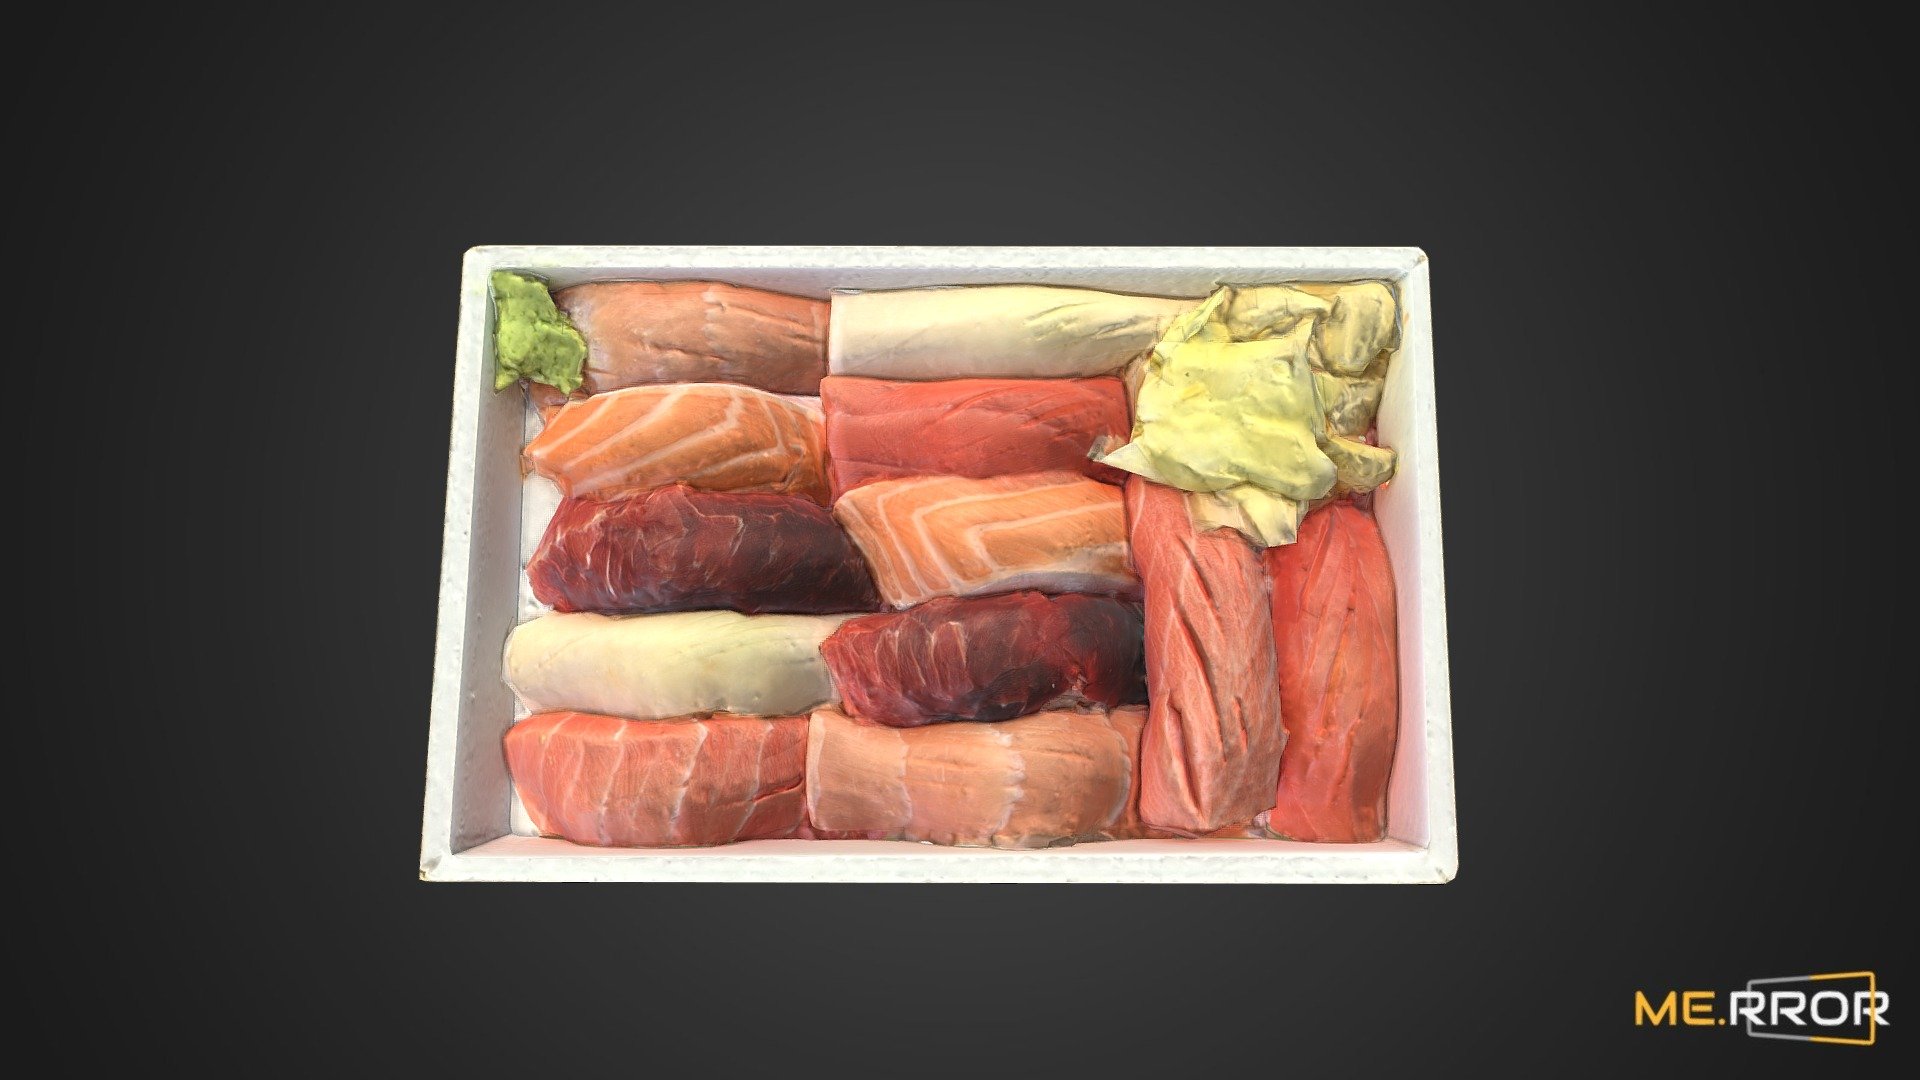 [Game-Ready] Sushi Lunch Box Photogrametry - Buy Royalty Free 3D model by ME.RROR Studio (@merror) 3d model